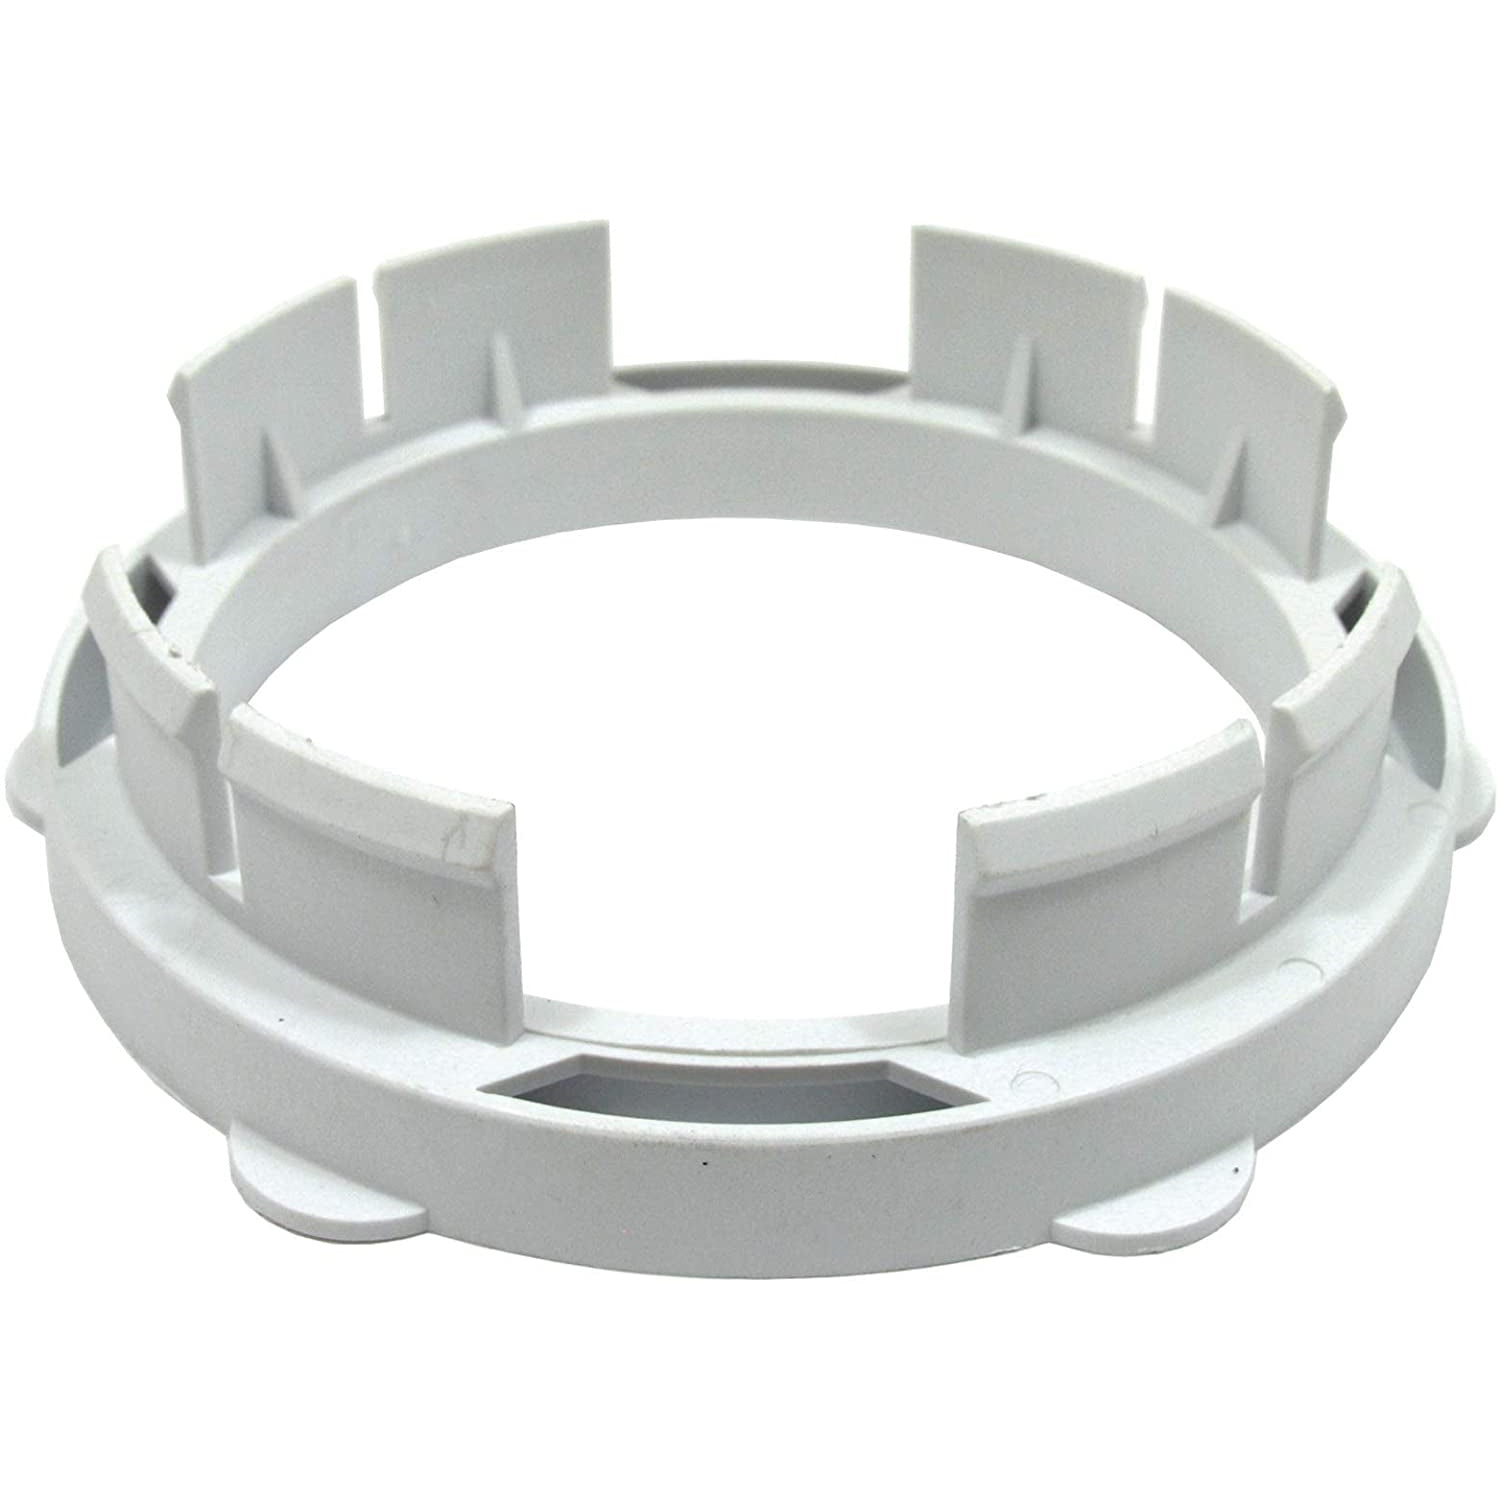 WHITE KNIGHT Tumble Dryer Vent Hose Condenser Adapter Kit (4m / 4")